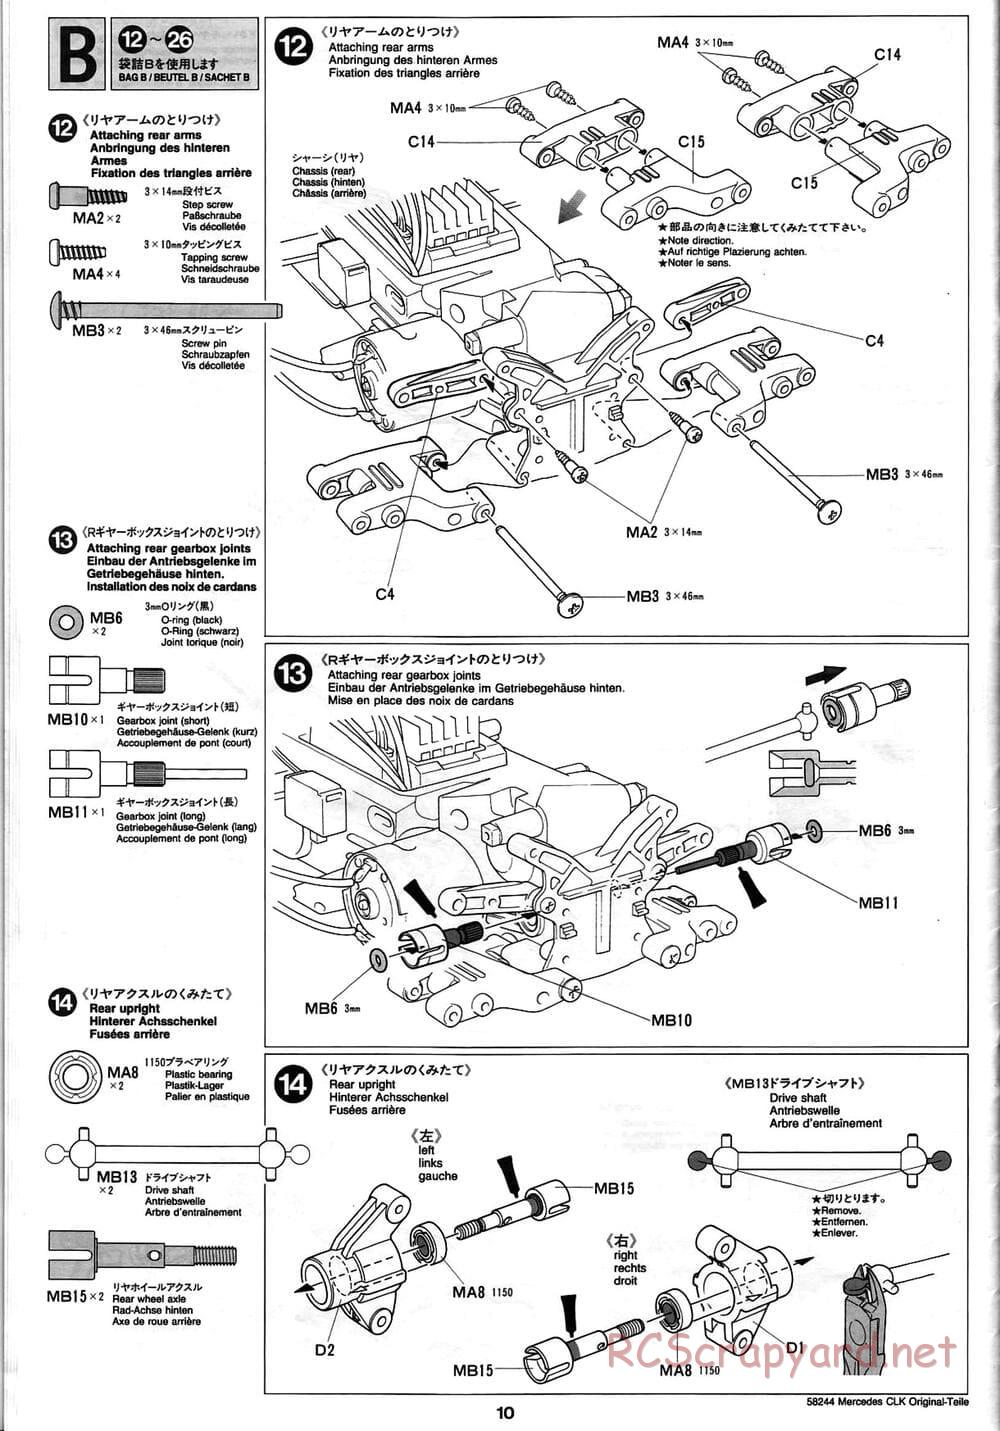 Tamiya - Mercedes CLK-GTR Original-Teile - TL-01 Chassis - Manual - Page 10